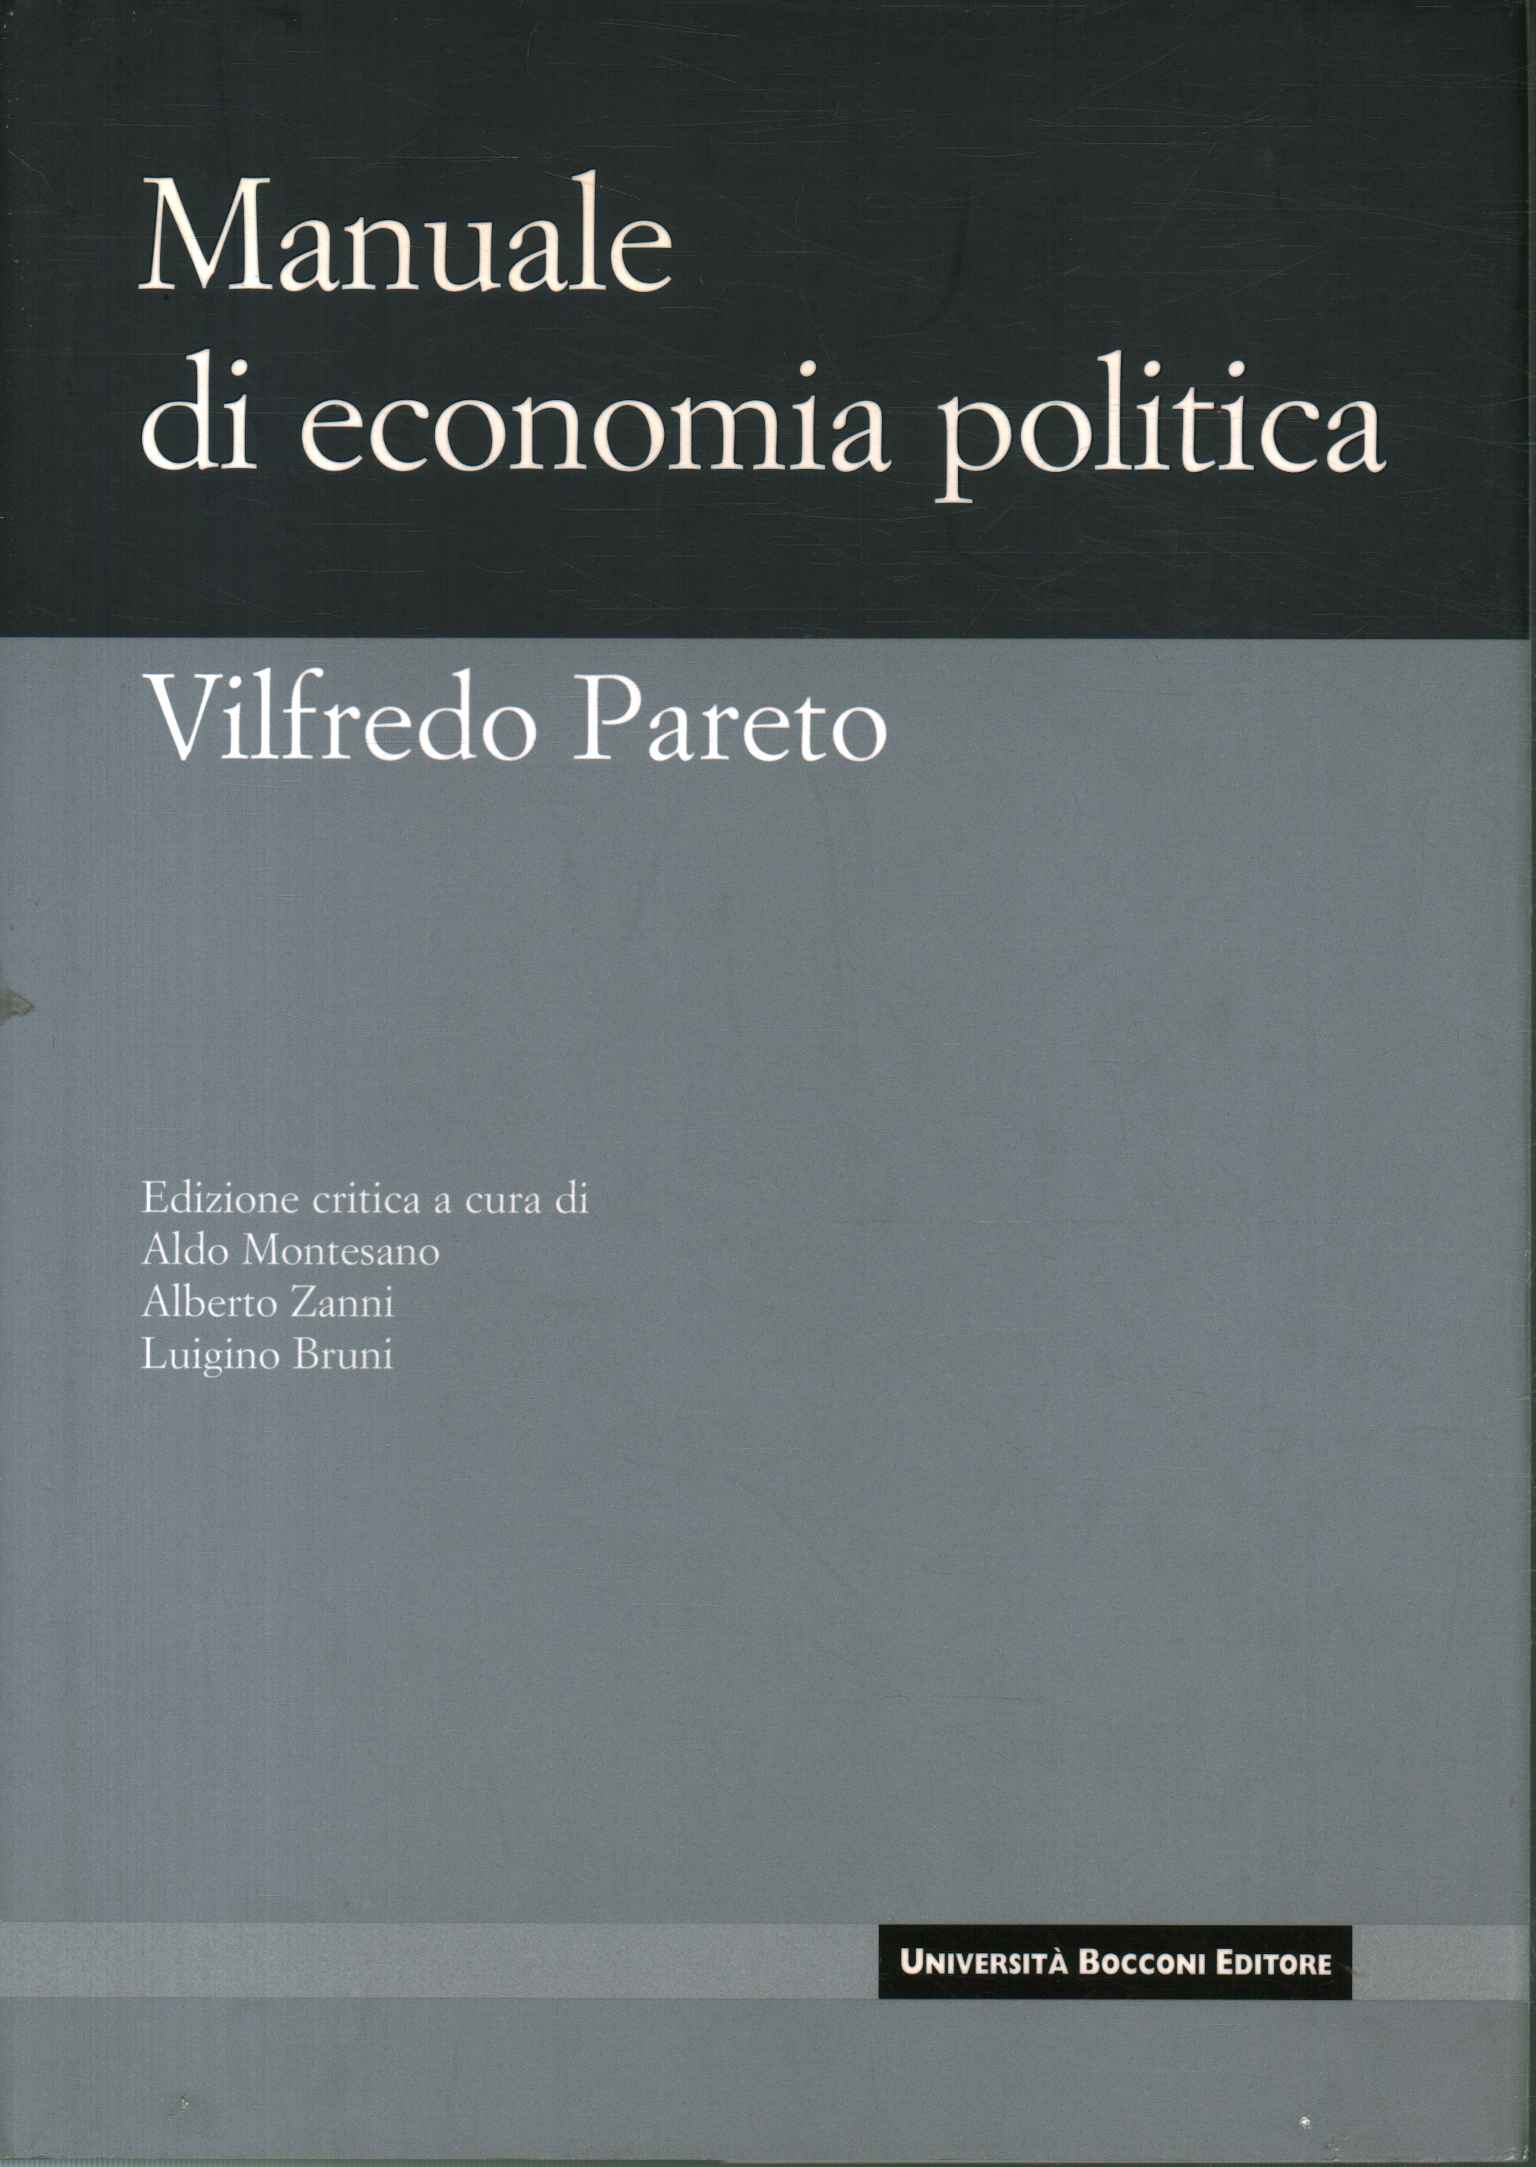 Manual of political economy